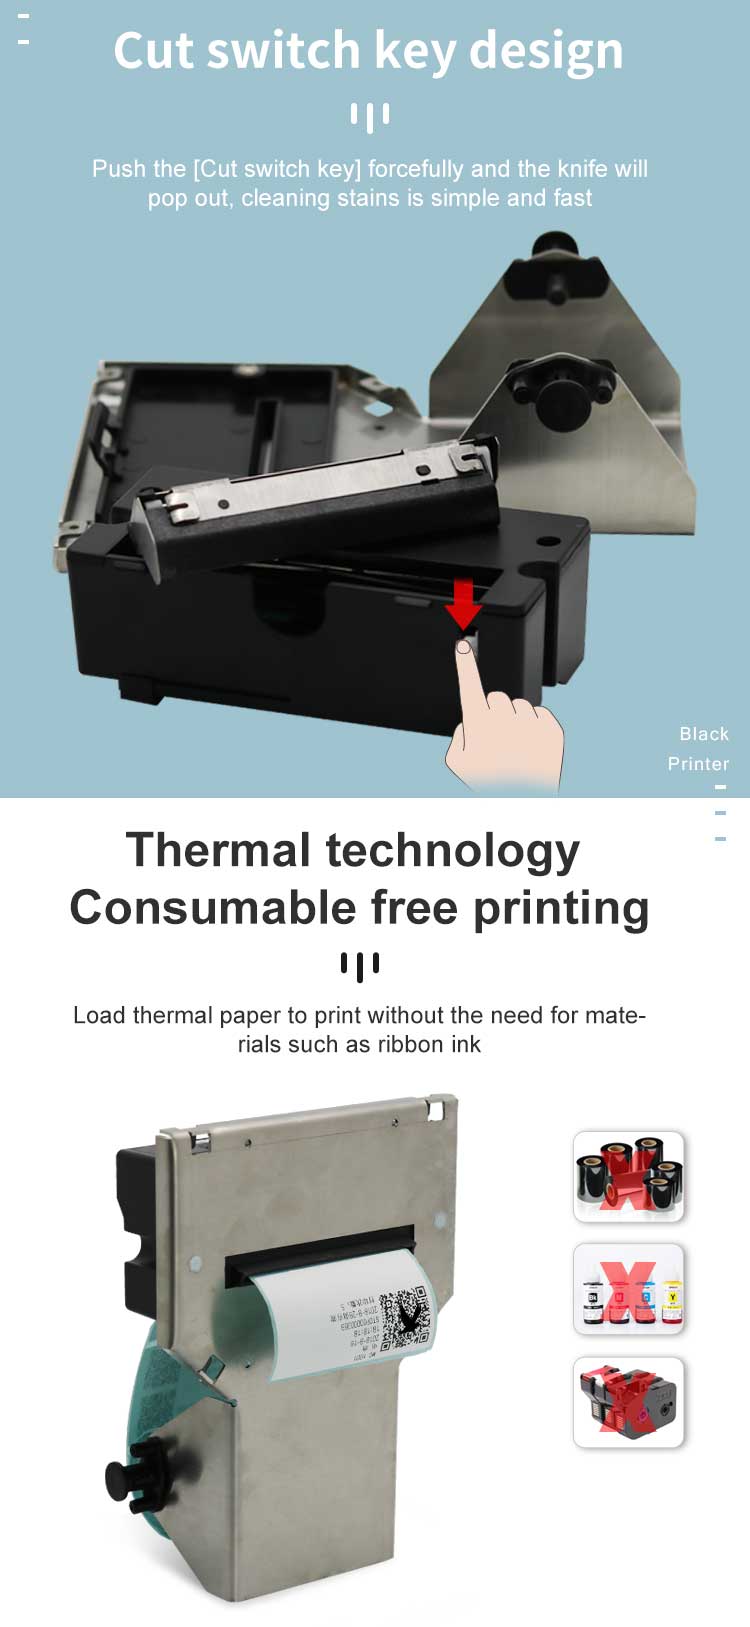 Embedded Label Printer supplier